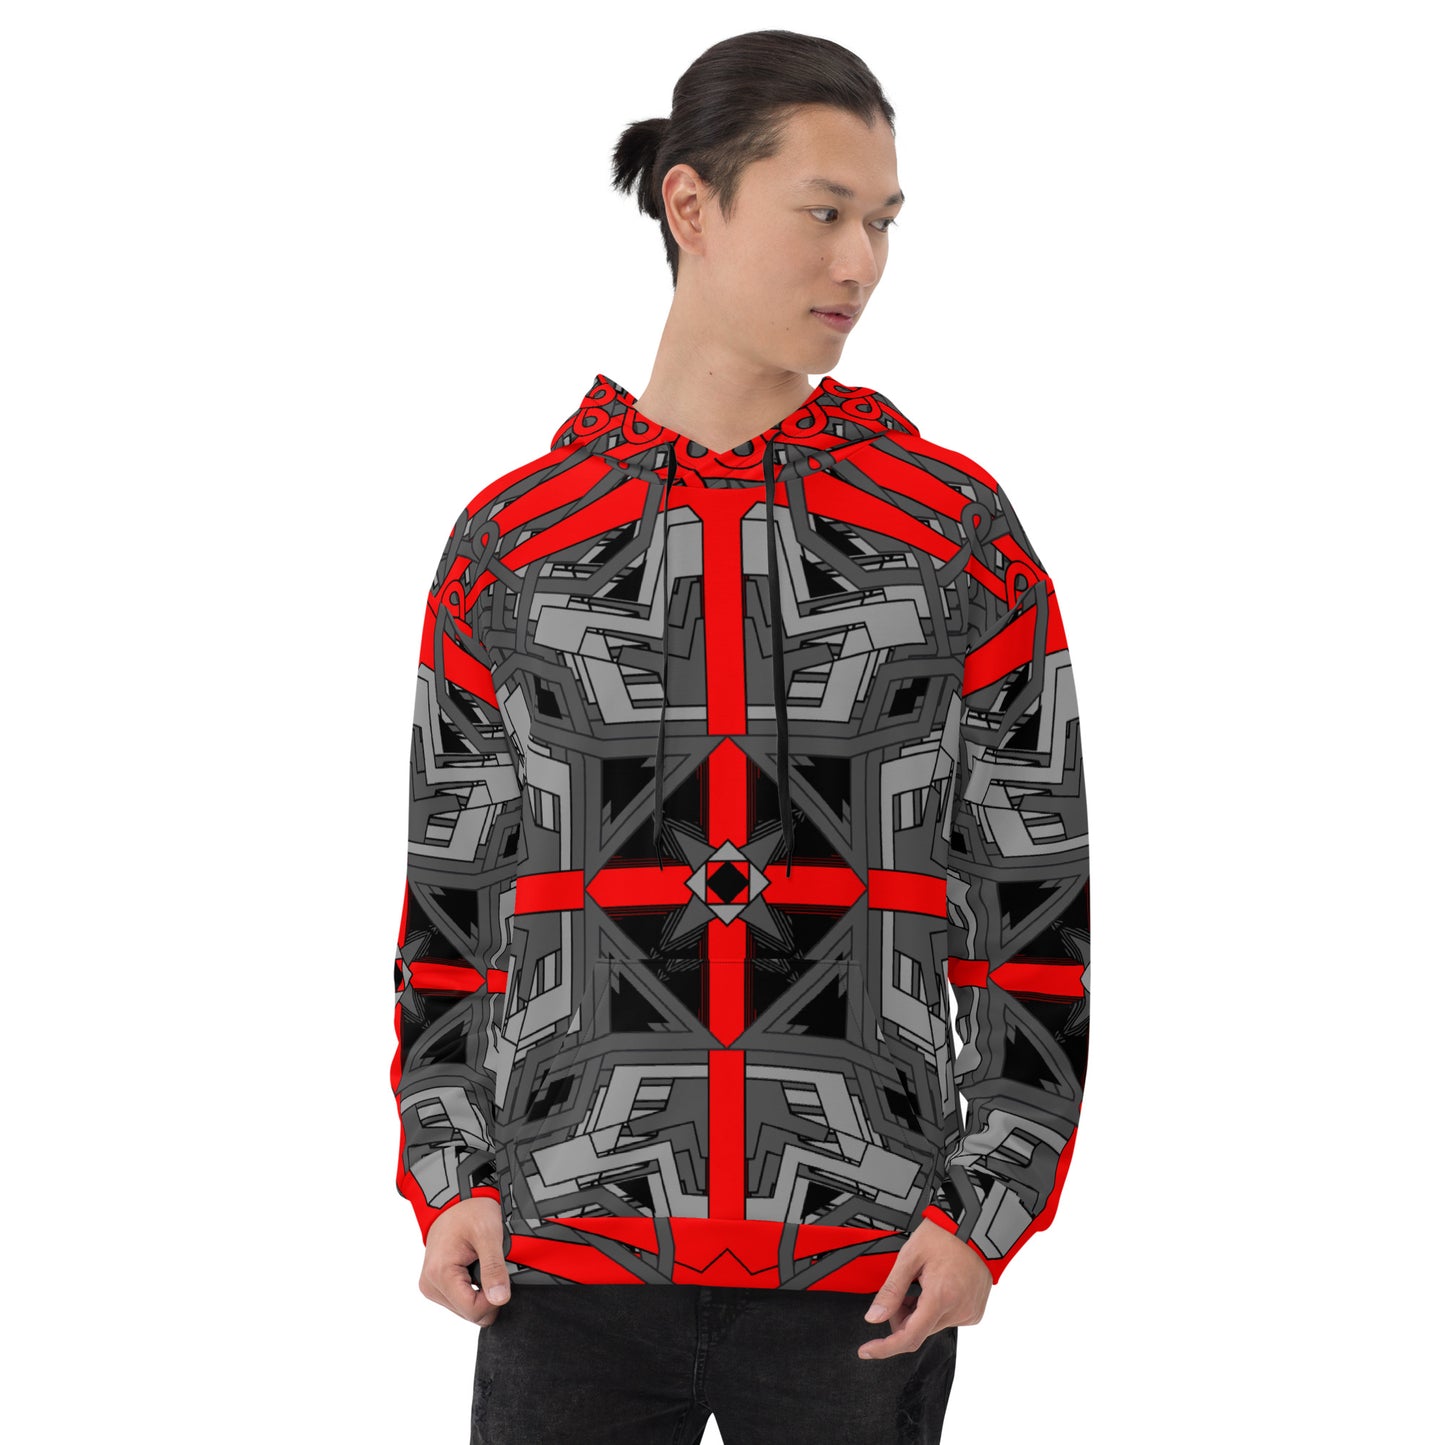 Oversized Geometric Shape Crosses All-Over Print Hoodie Red, Black & Grey Unisex